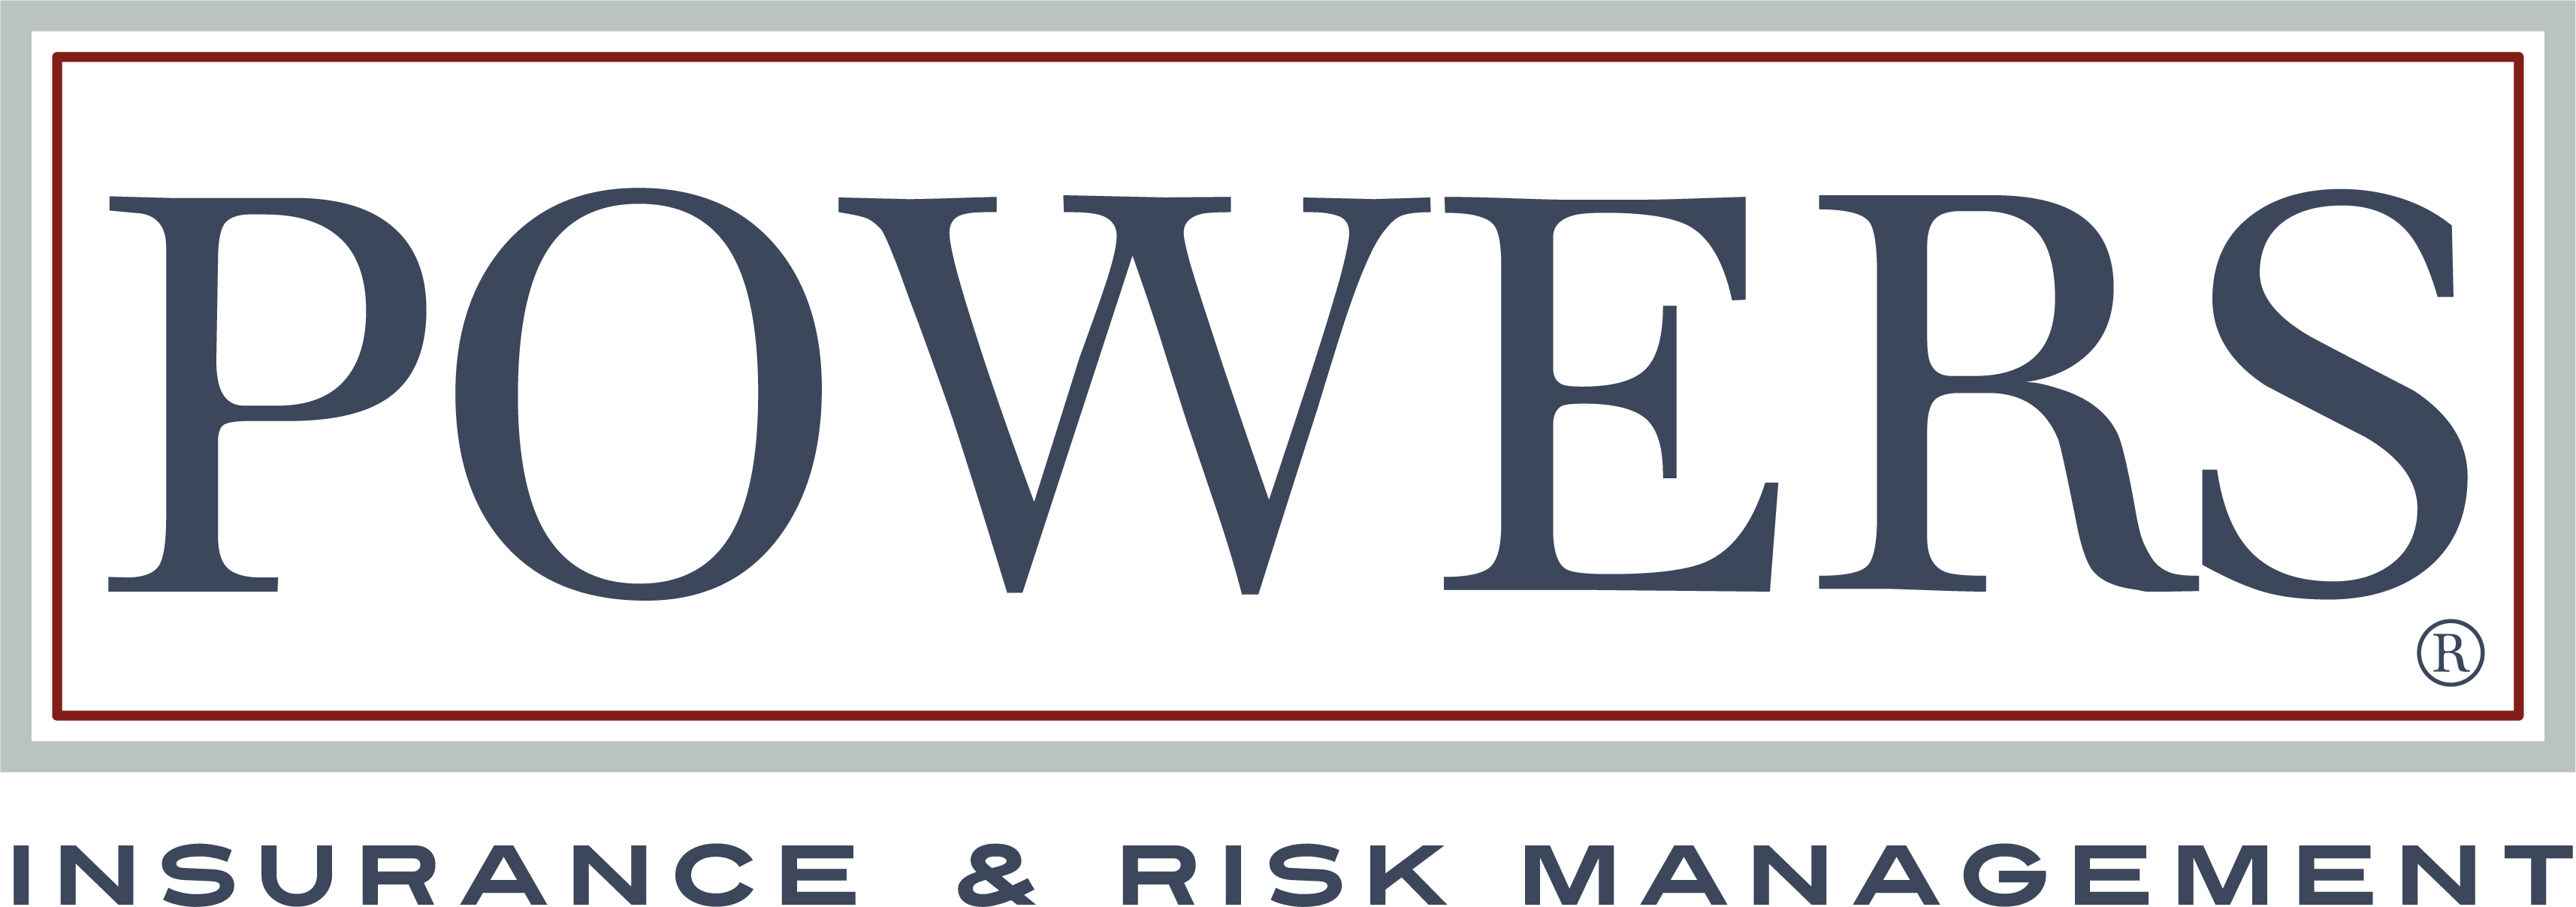 POWERS Insurance & Risk Management